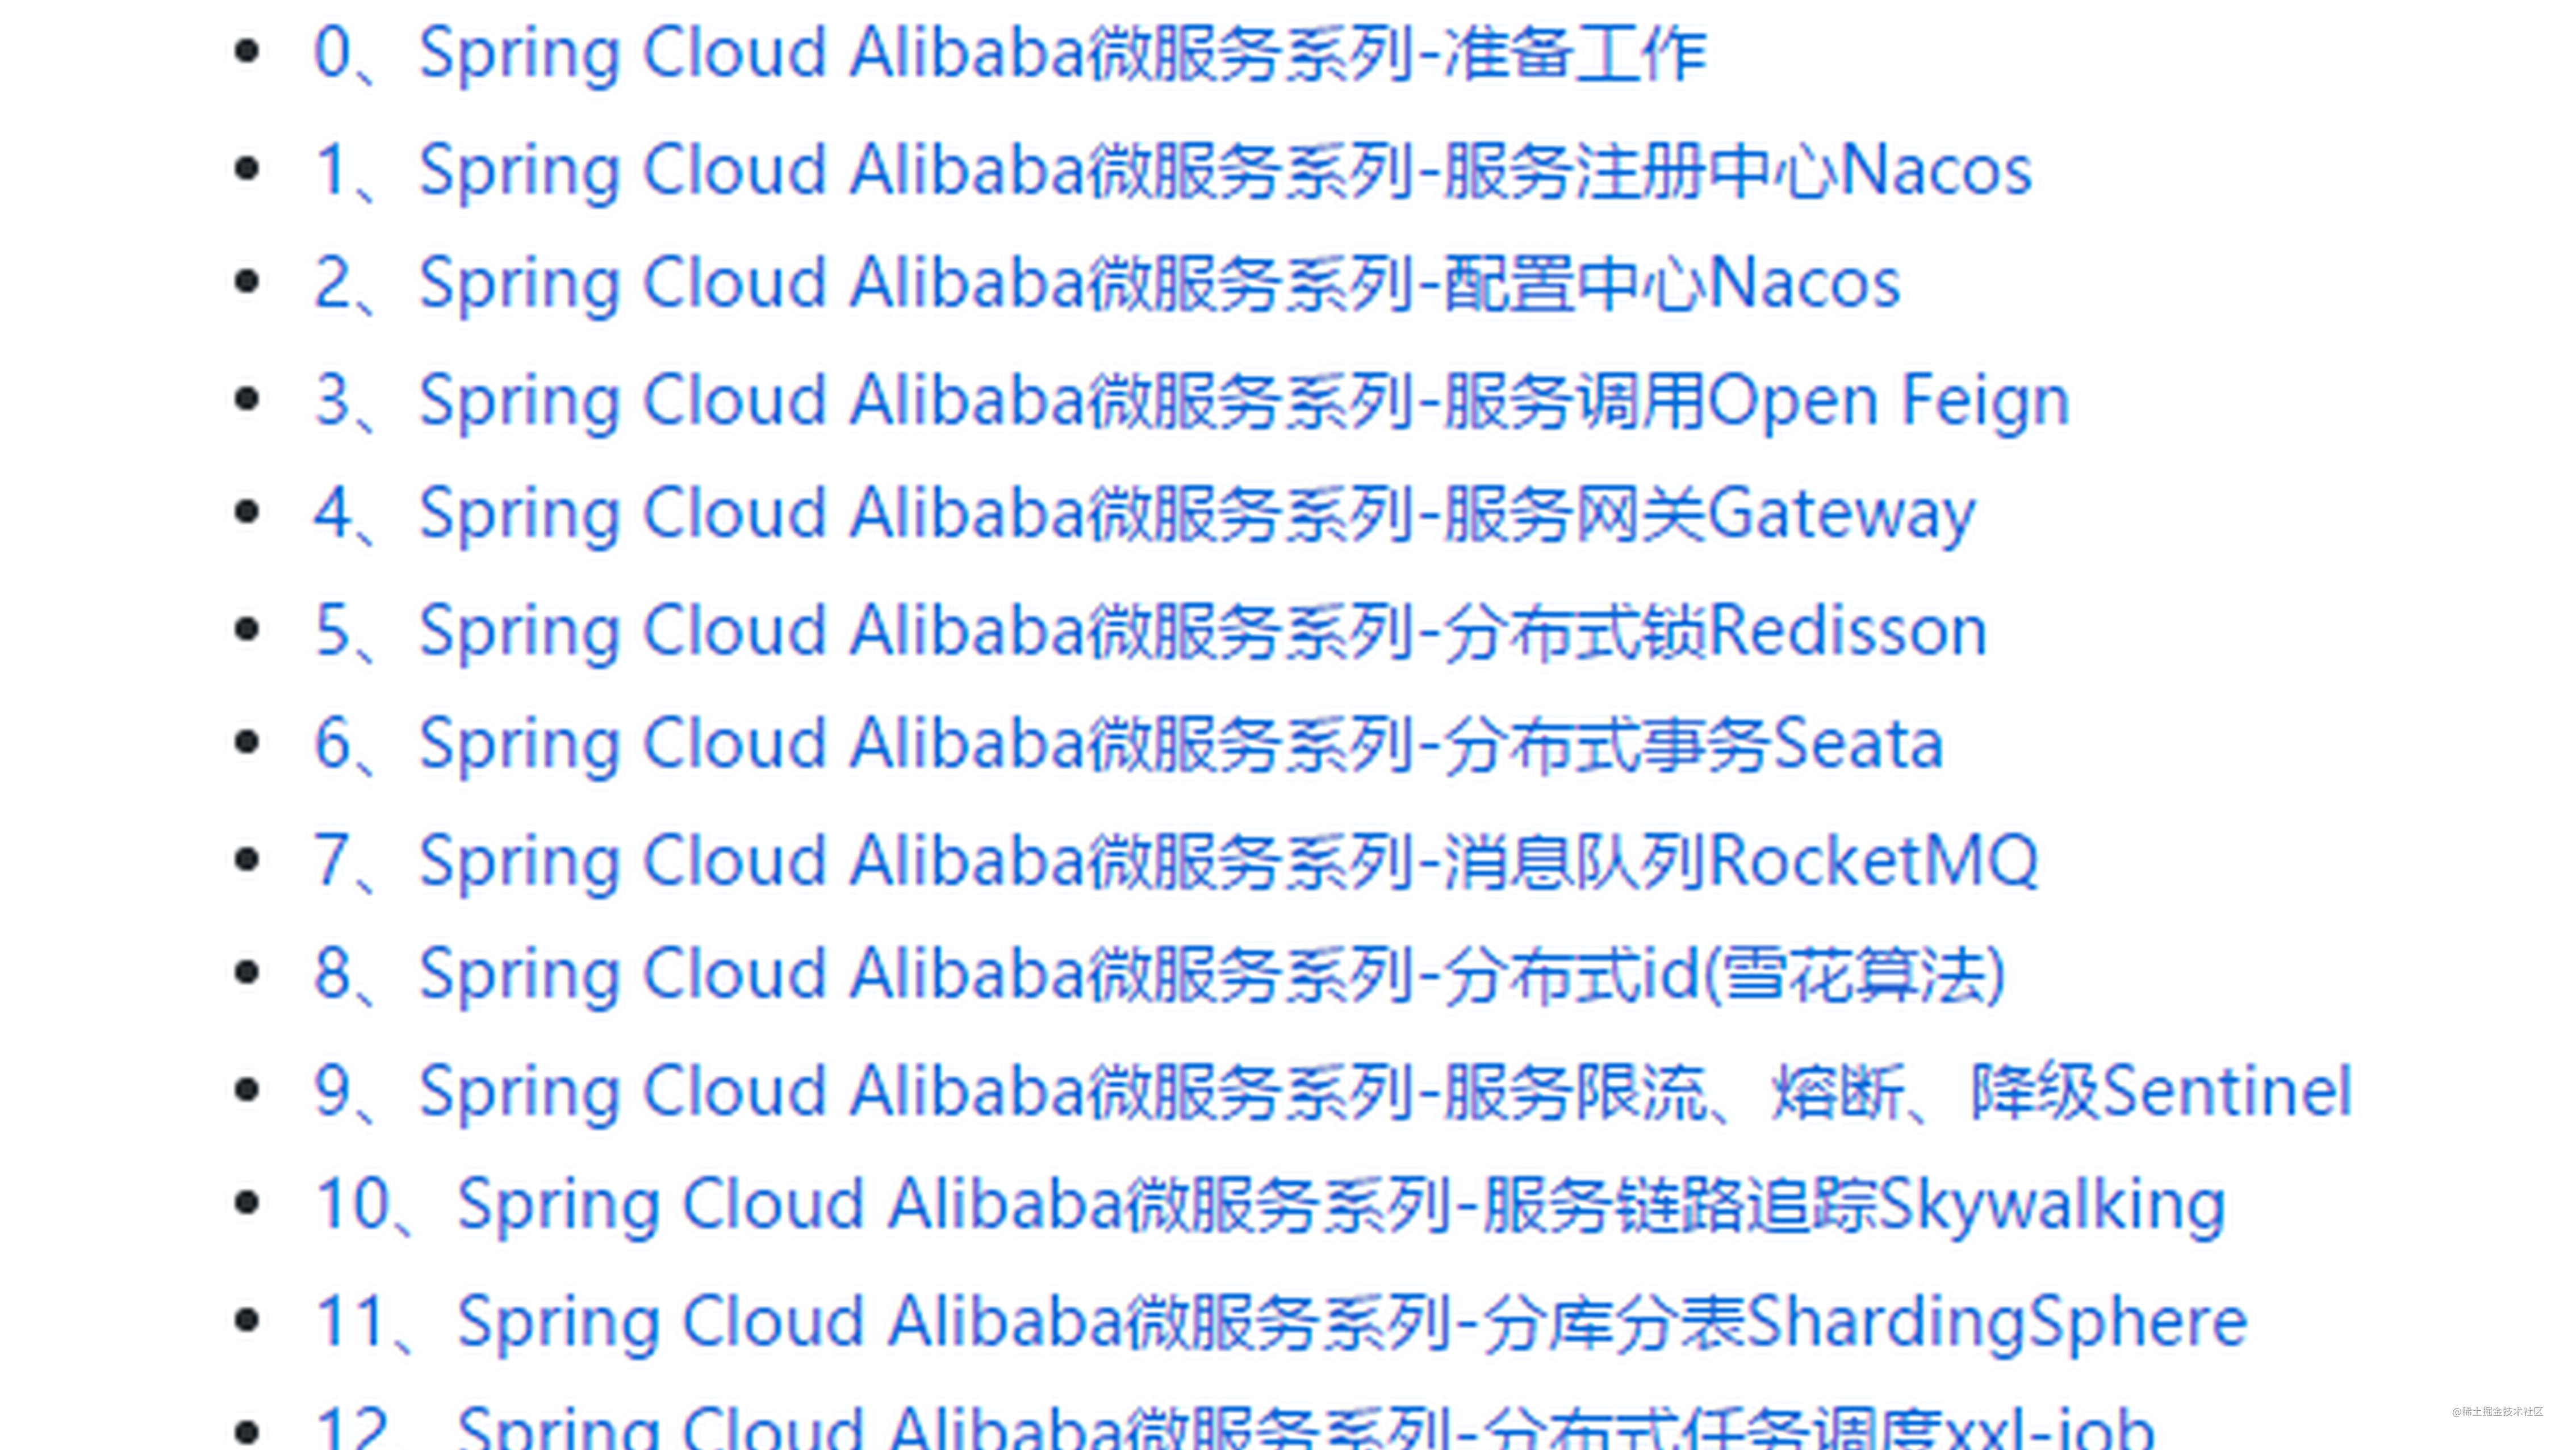 Spring Cloud Alibaba 服务链路追踪Skywalking